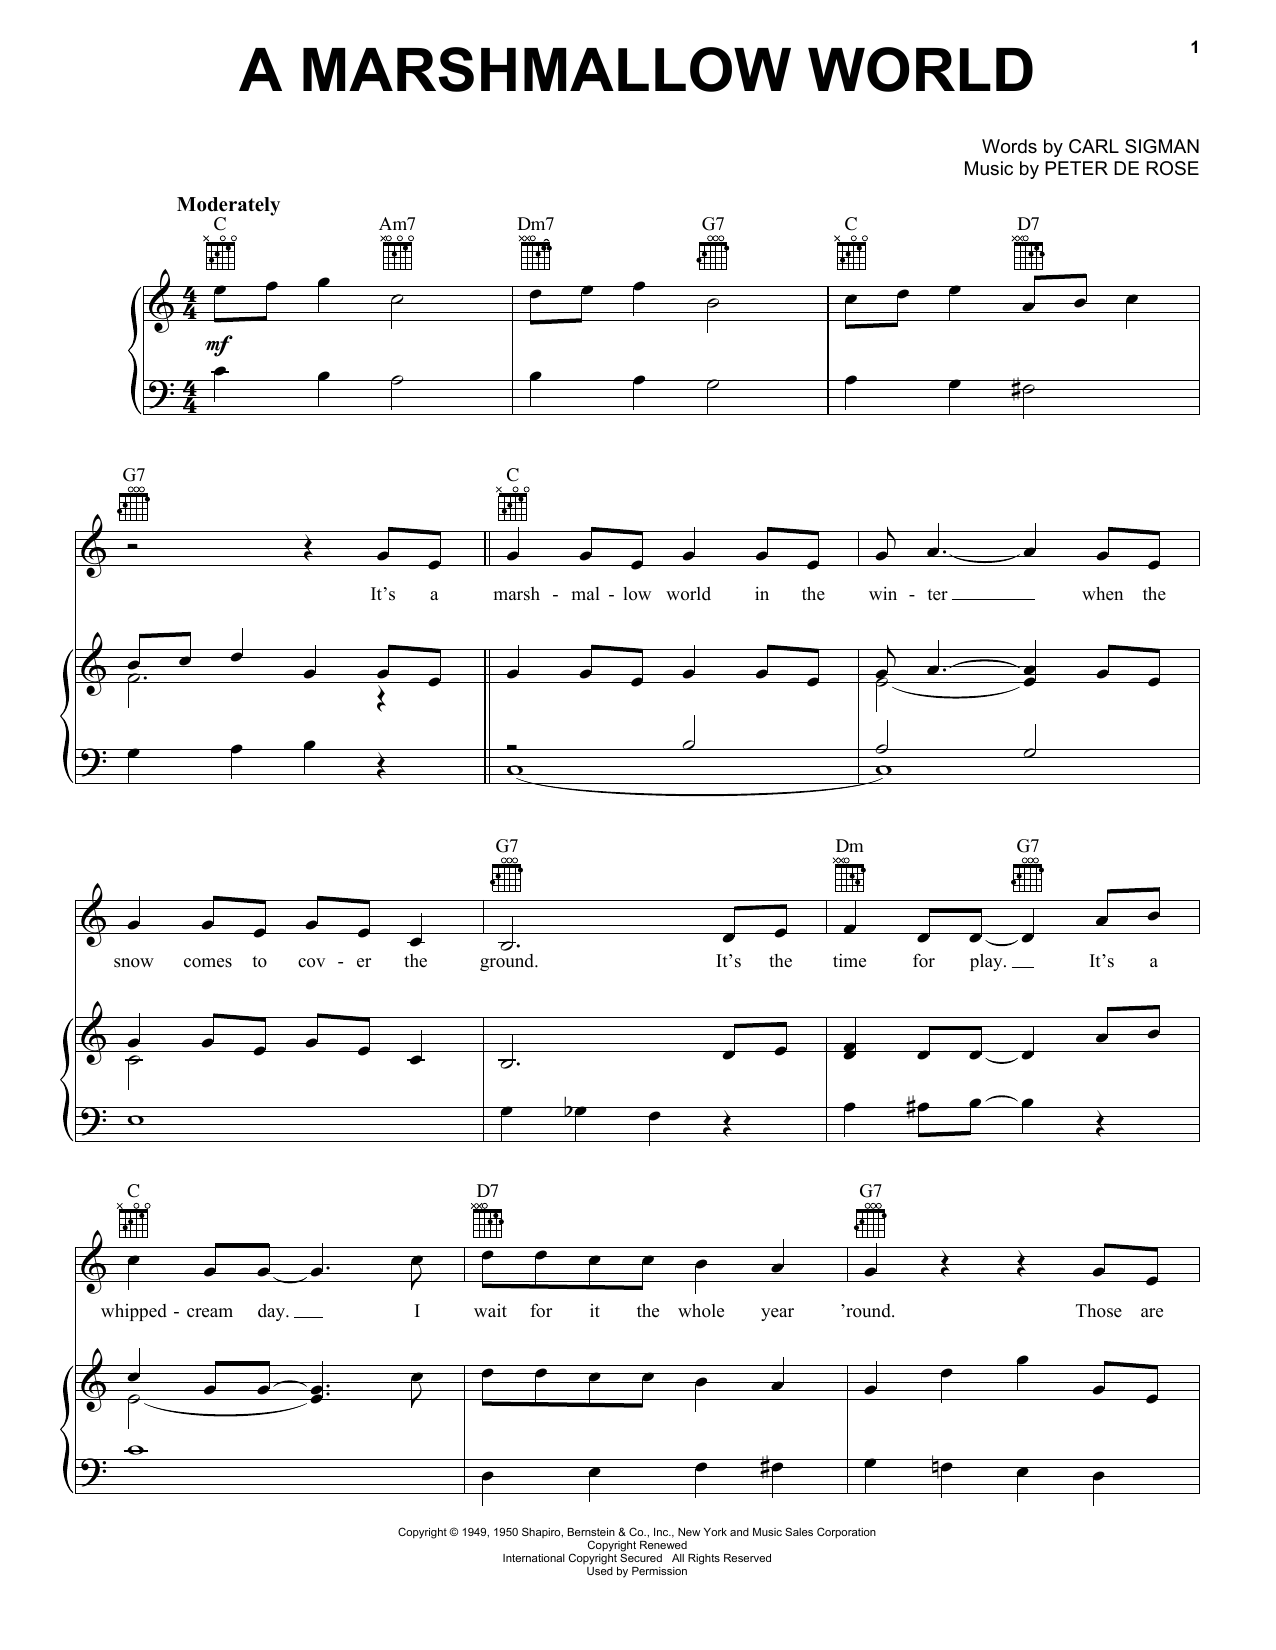 Carl Sigman A Marshmallow World sheet music notes and chords. Download Printable PDF.